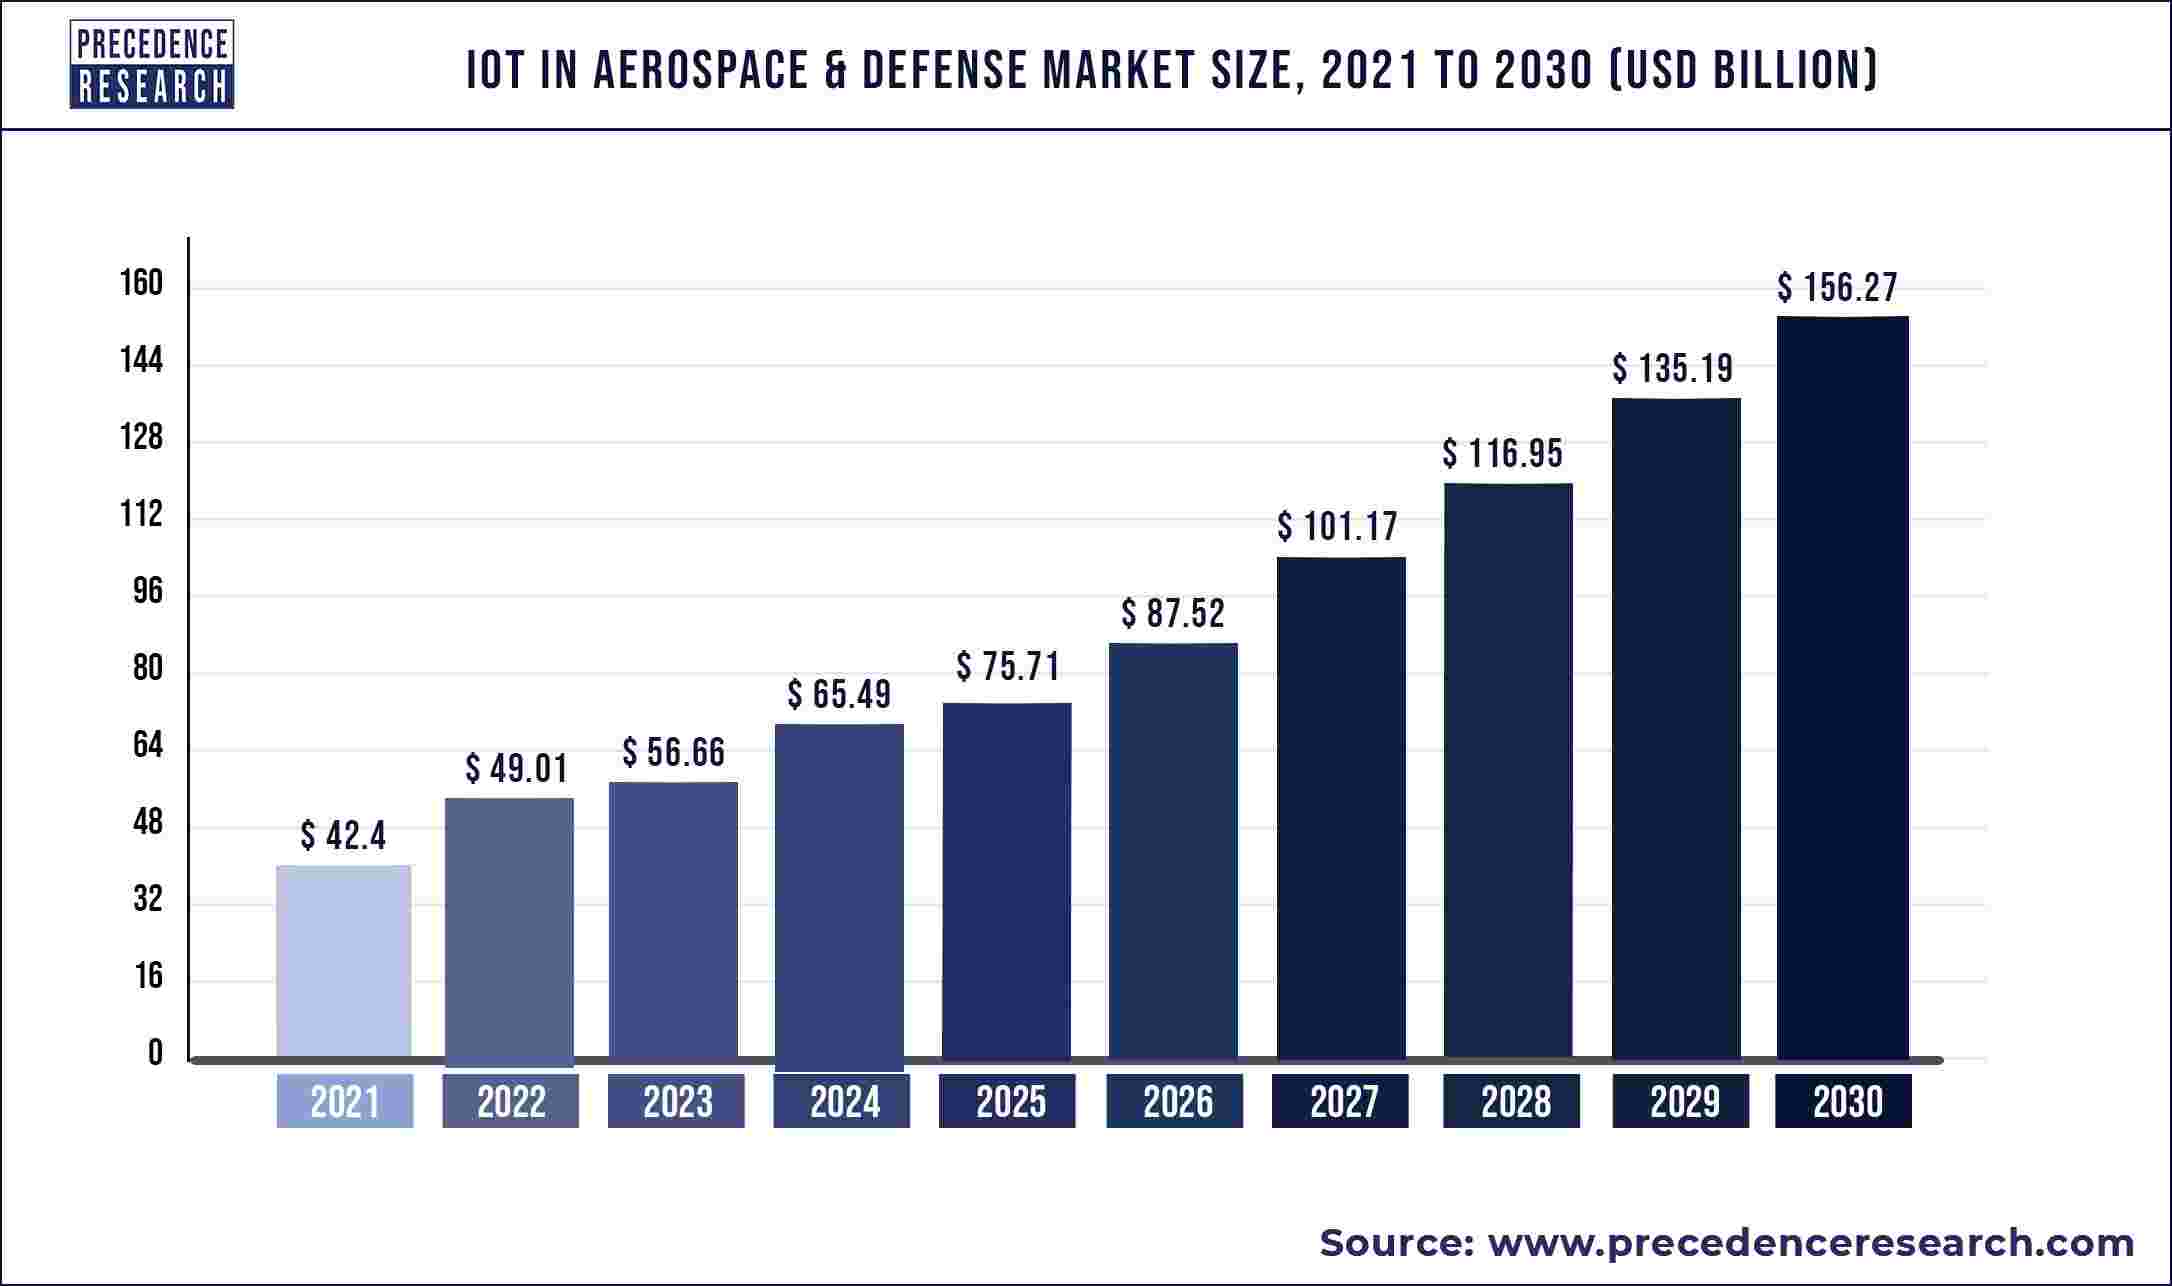 IoT in Aerospace & Defense